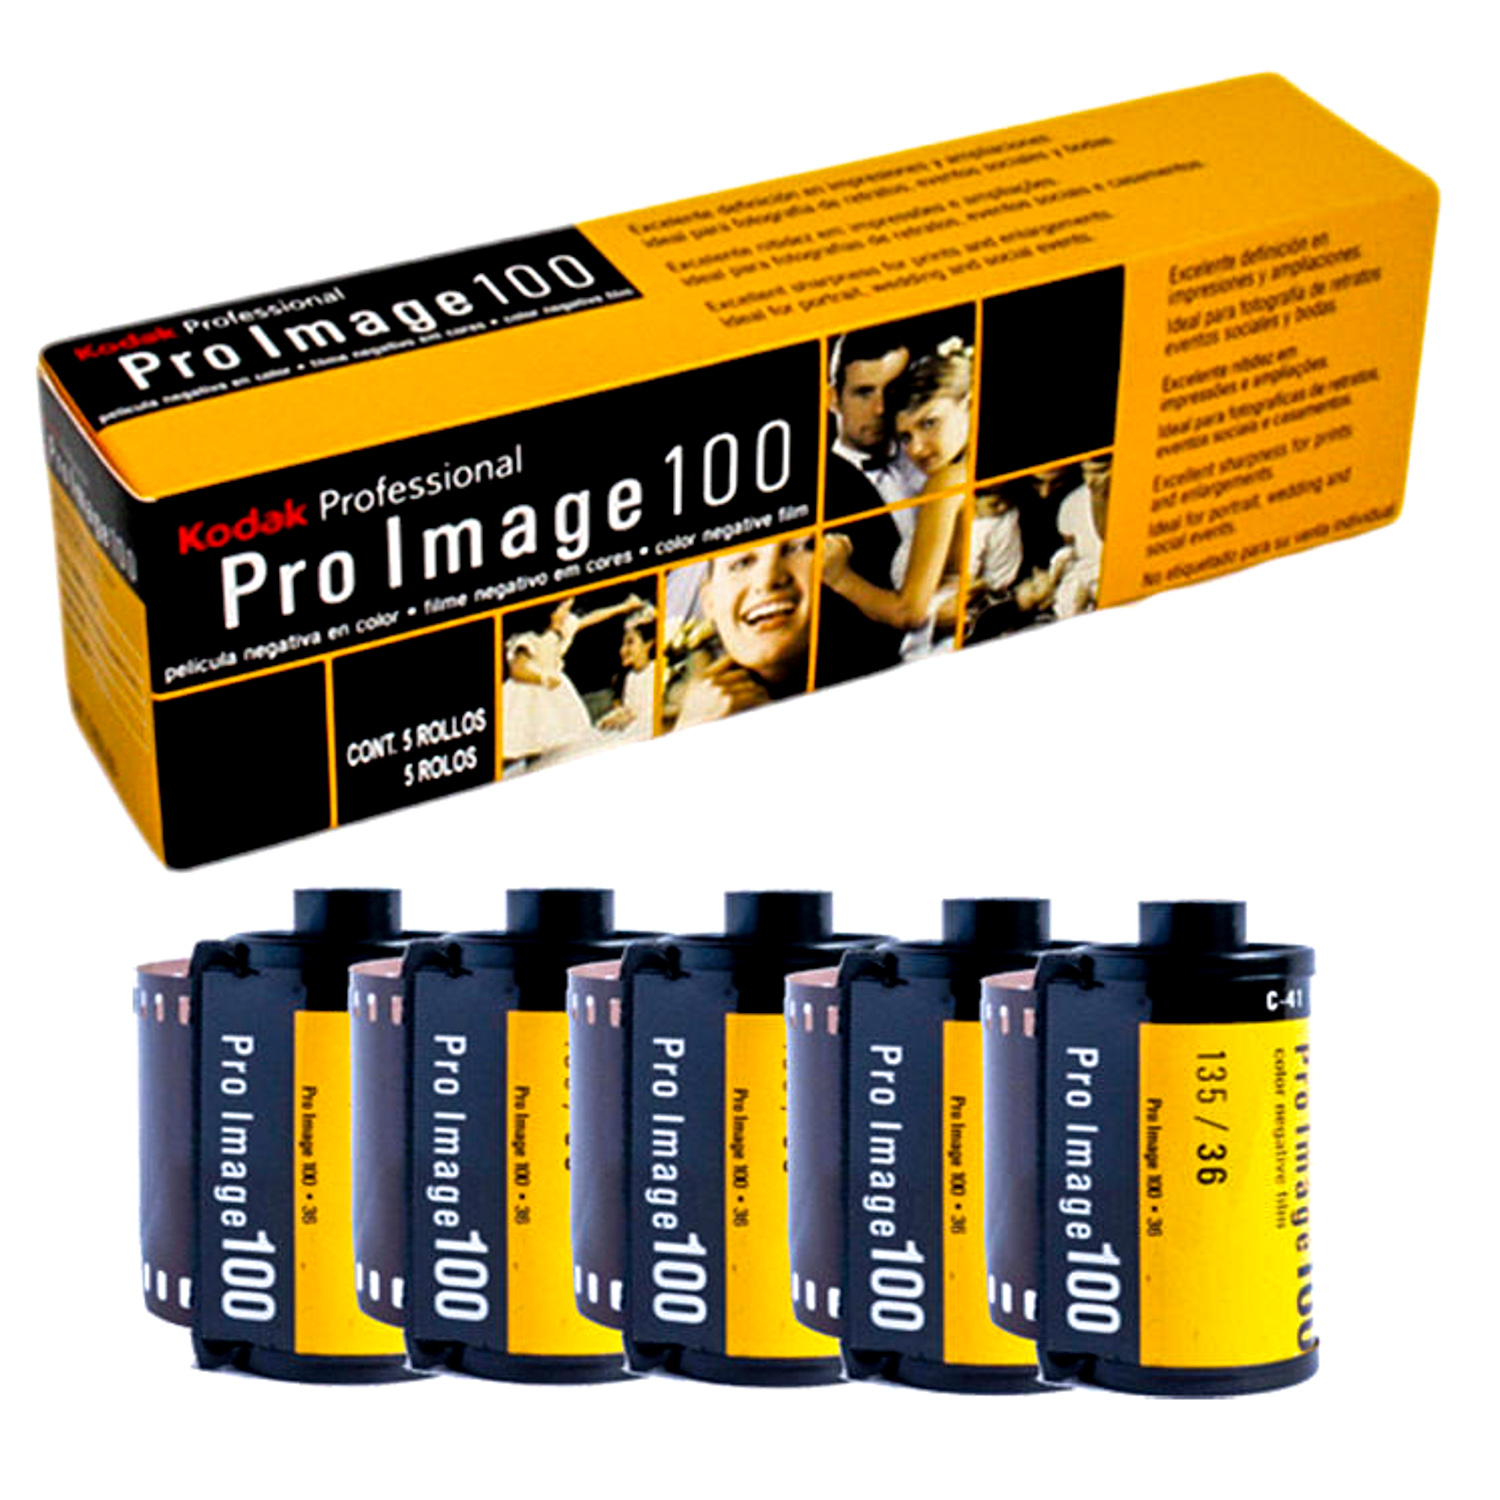 TThumbnail image for Kodak Pro Image 100 - 135-36 (5 rolls)